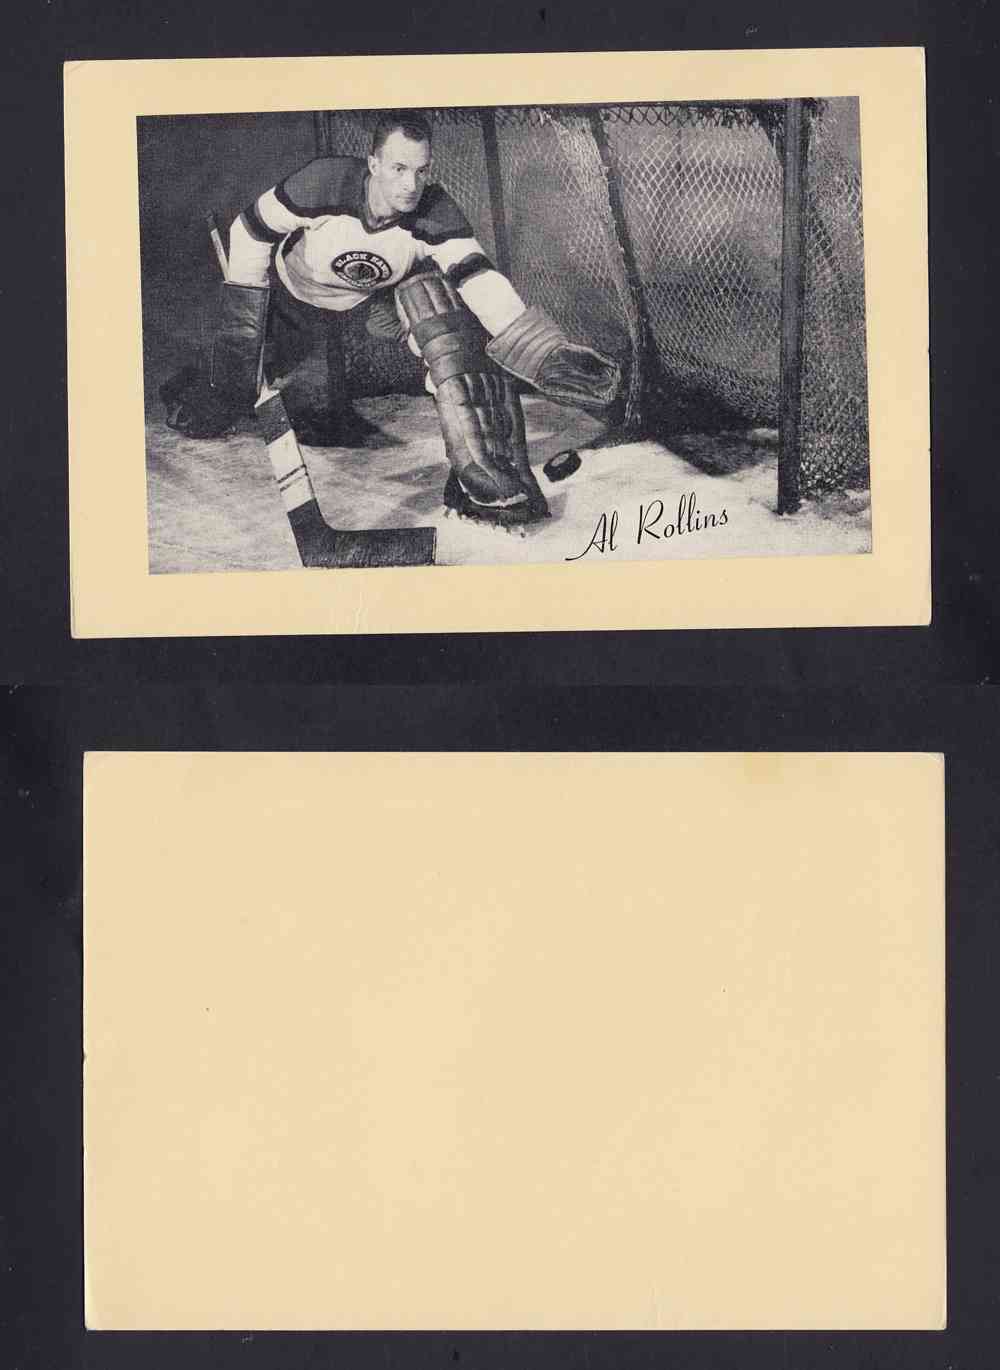 1945-64 BEEHIVE PHOTO GR.2 AL. ROLLINS photo